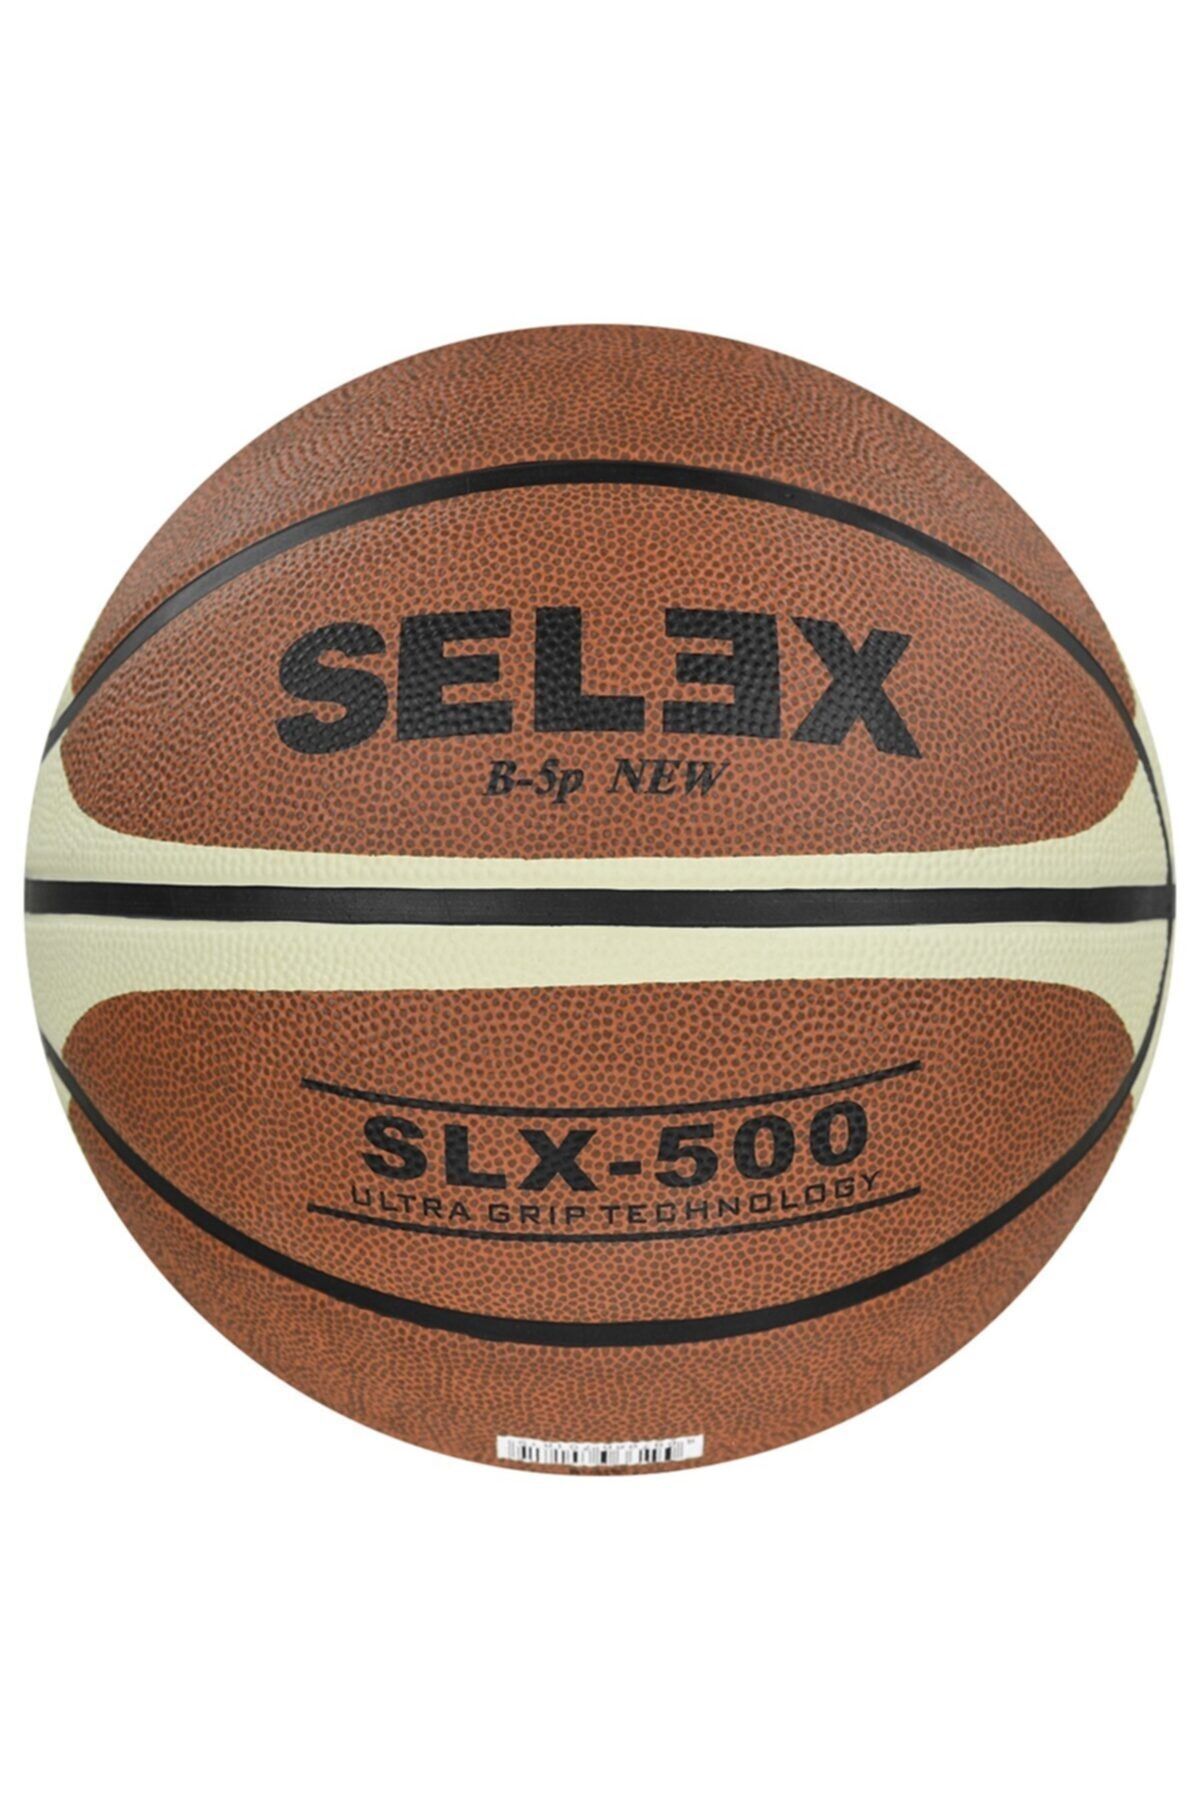 SELEX Slx-500 Basketbol Topu